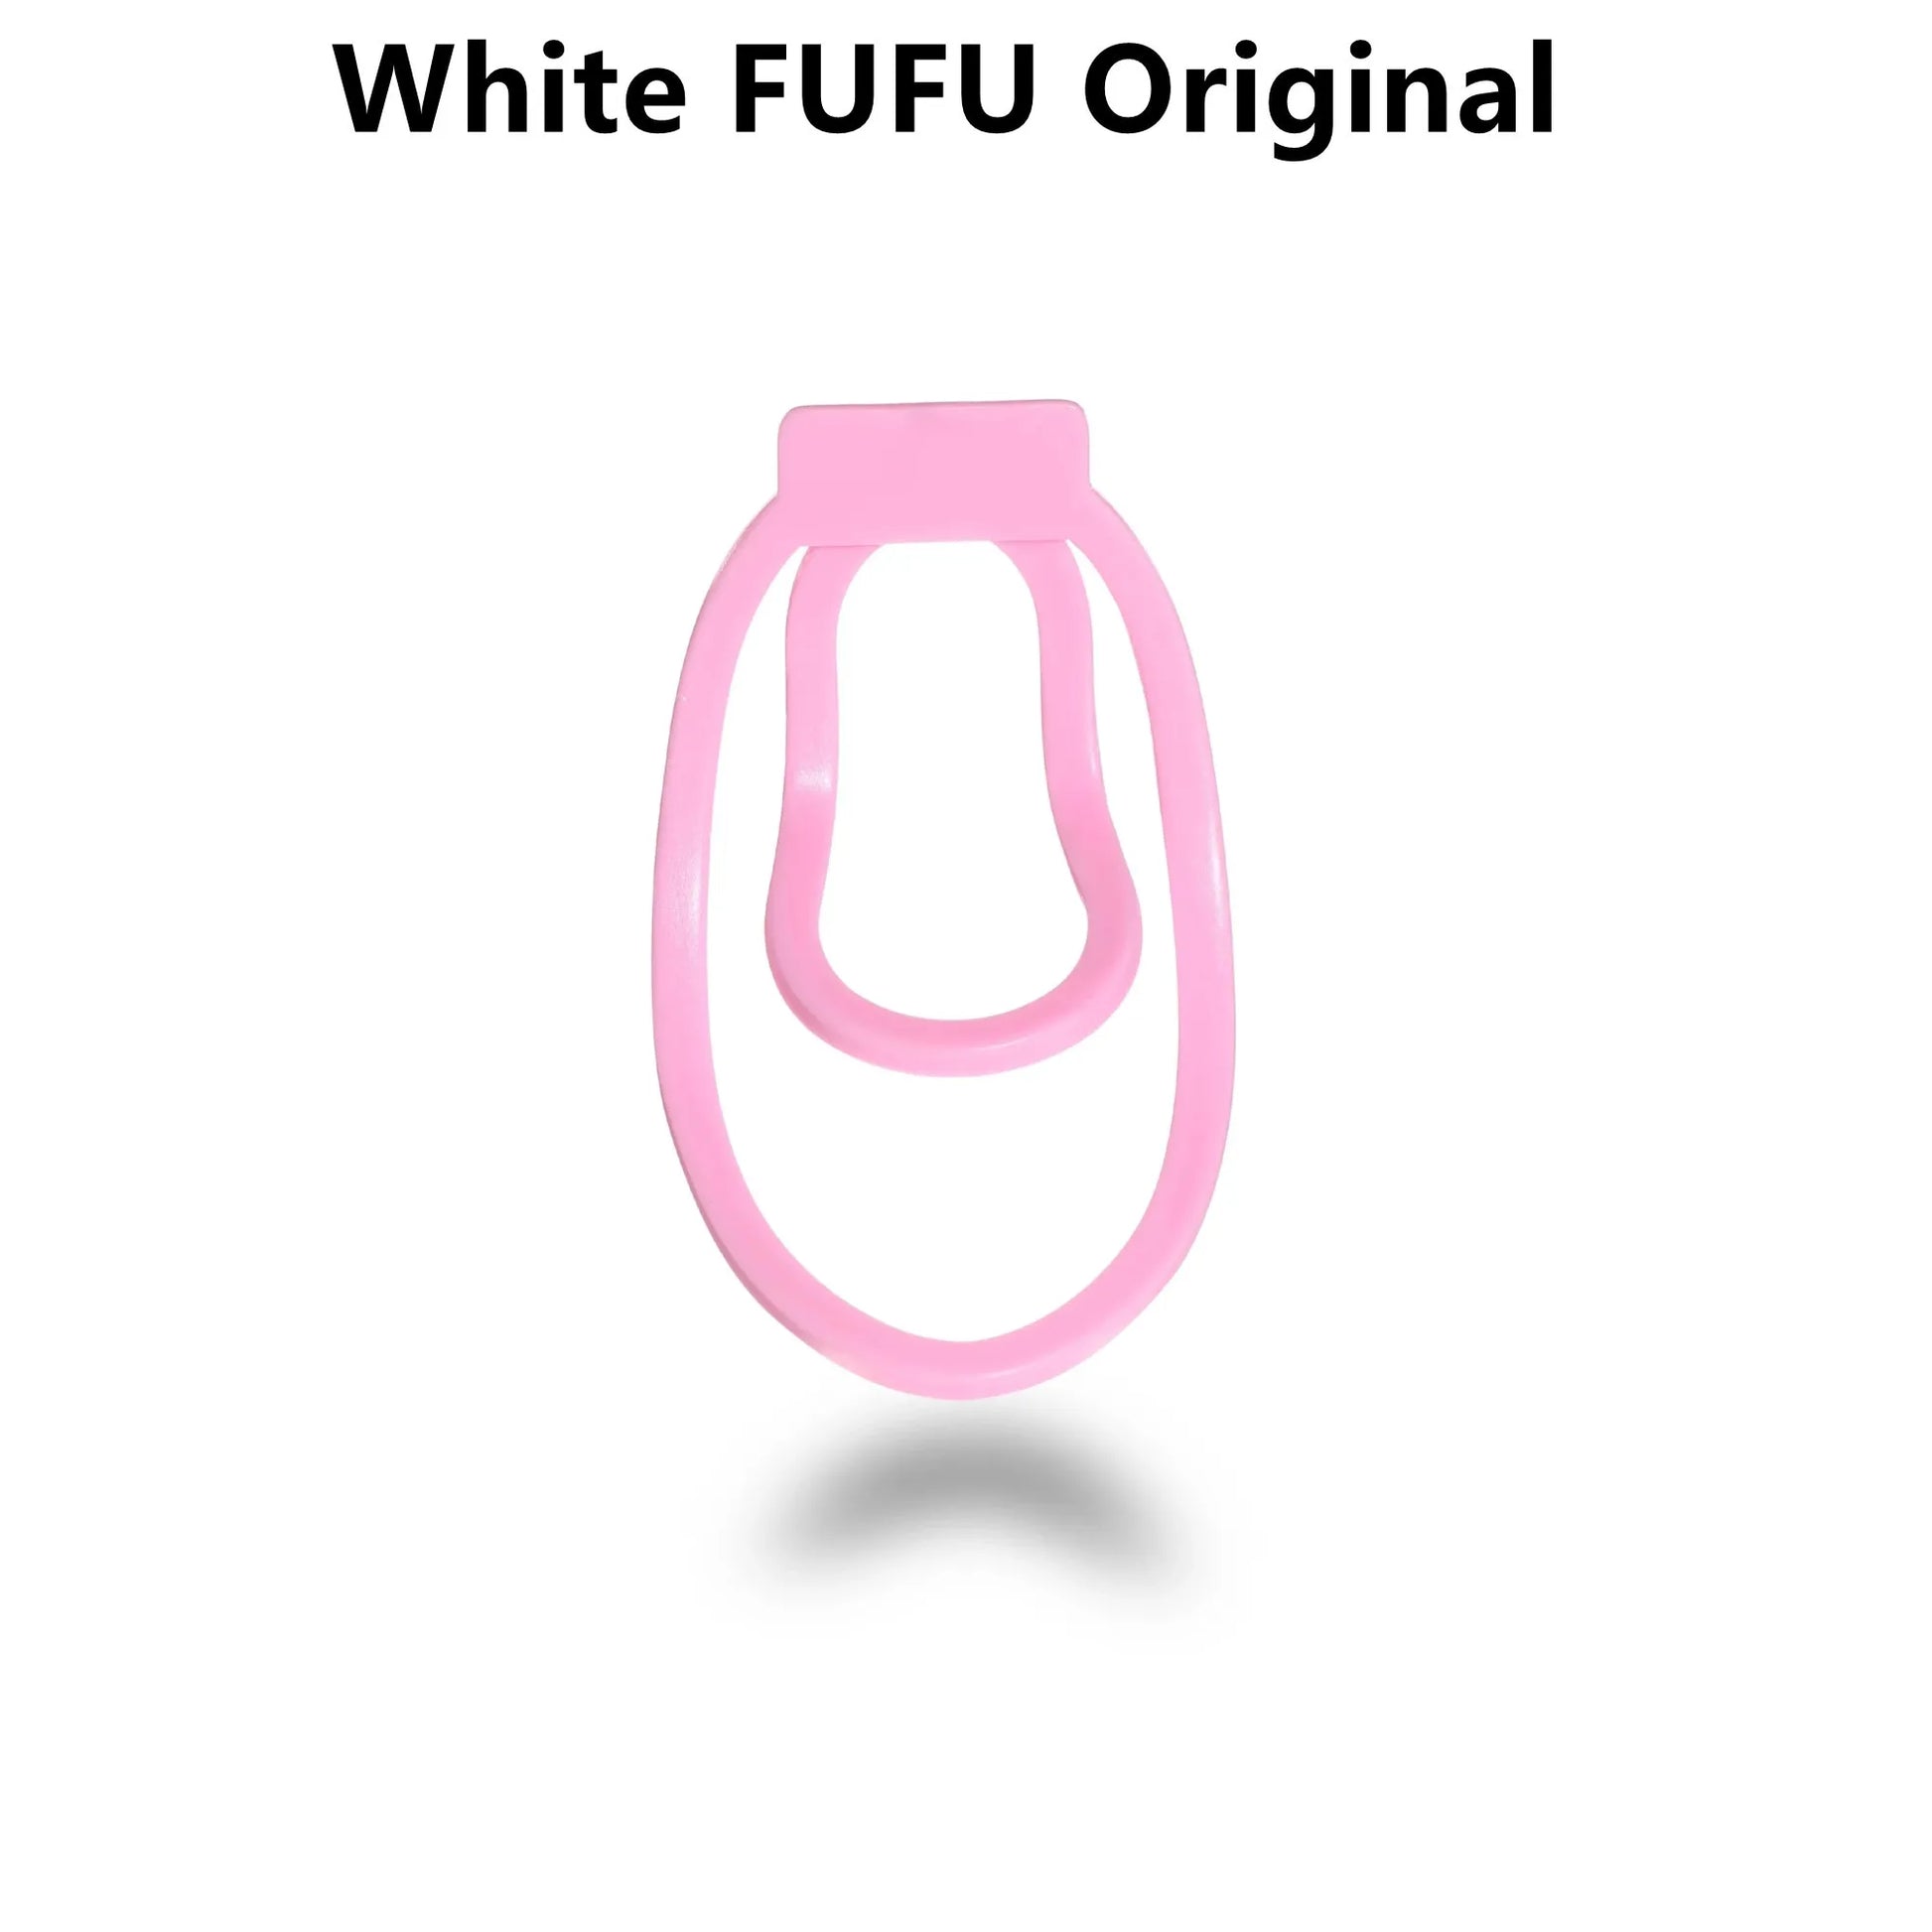 M2018 FuFu Clip boosts confidence and realistic feminine